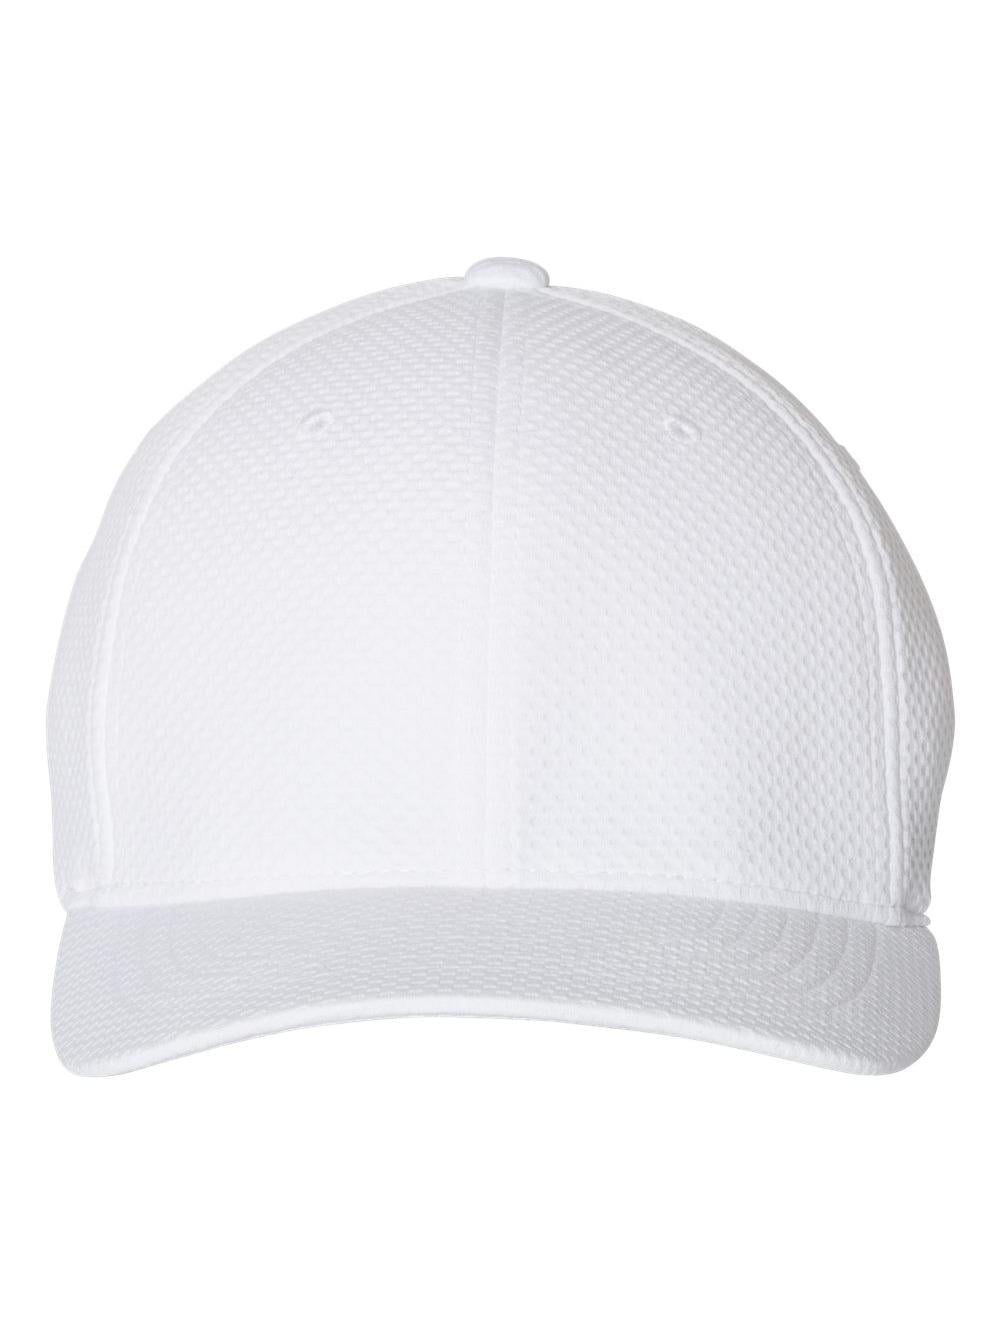 Flexfit Cool & Dry 3D Hexagon Jersey Cap - WHITE - L/XL